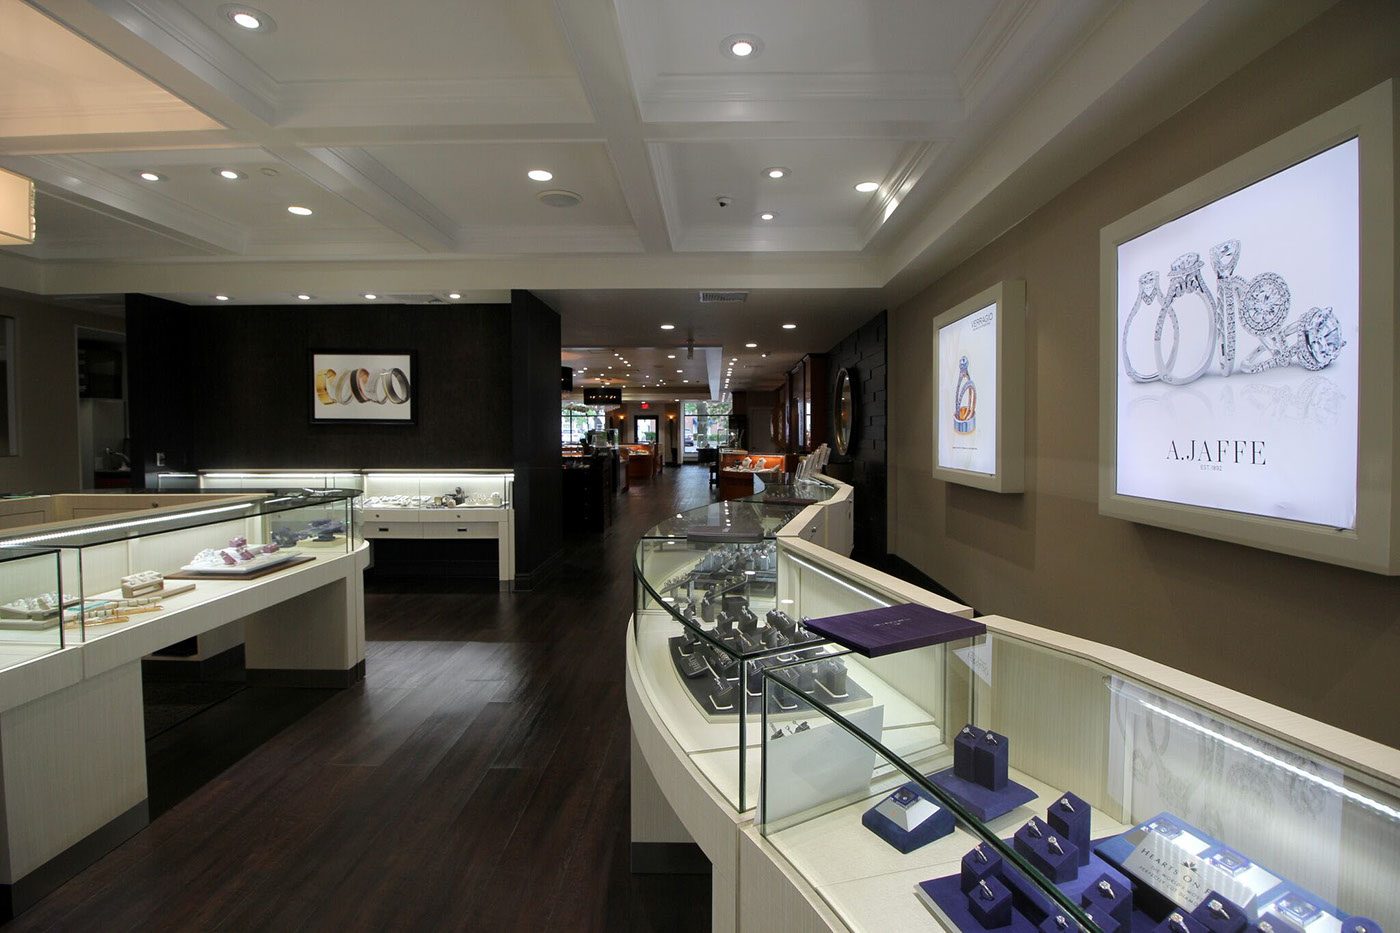 jewellery shop interior design case study ppt